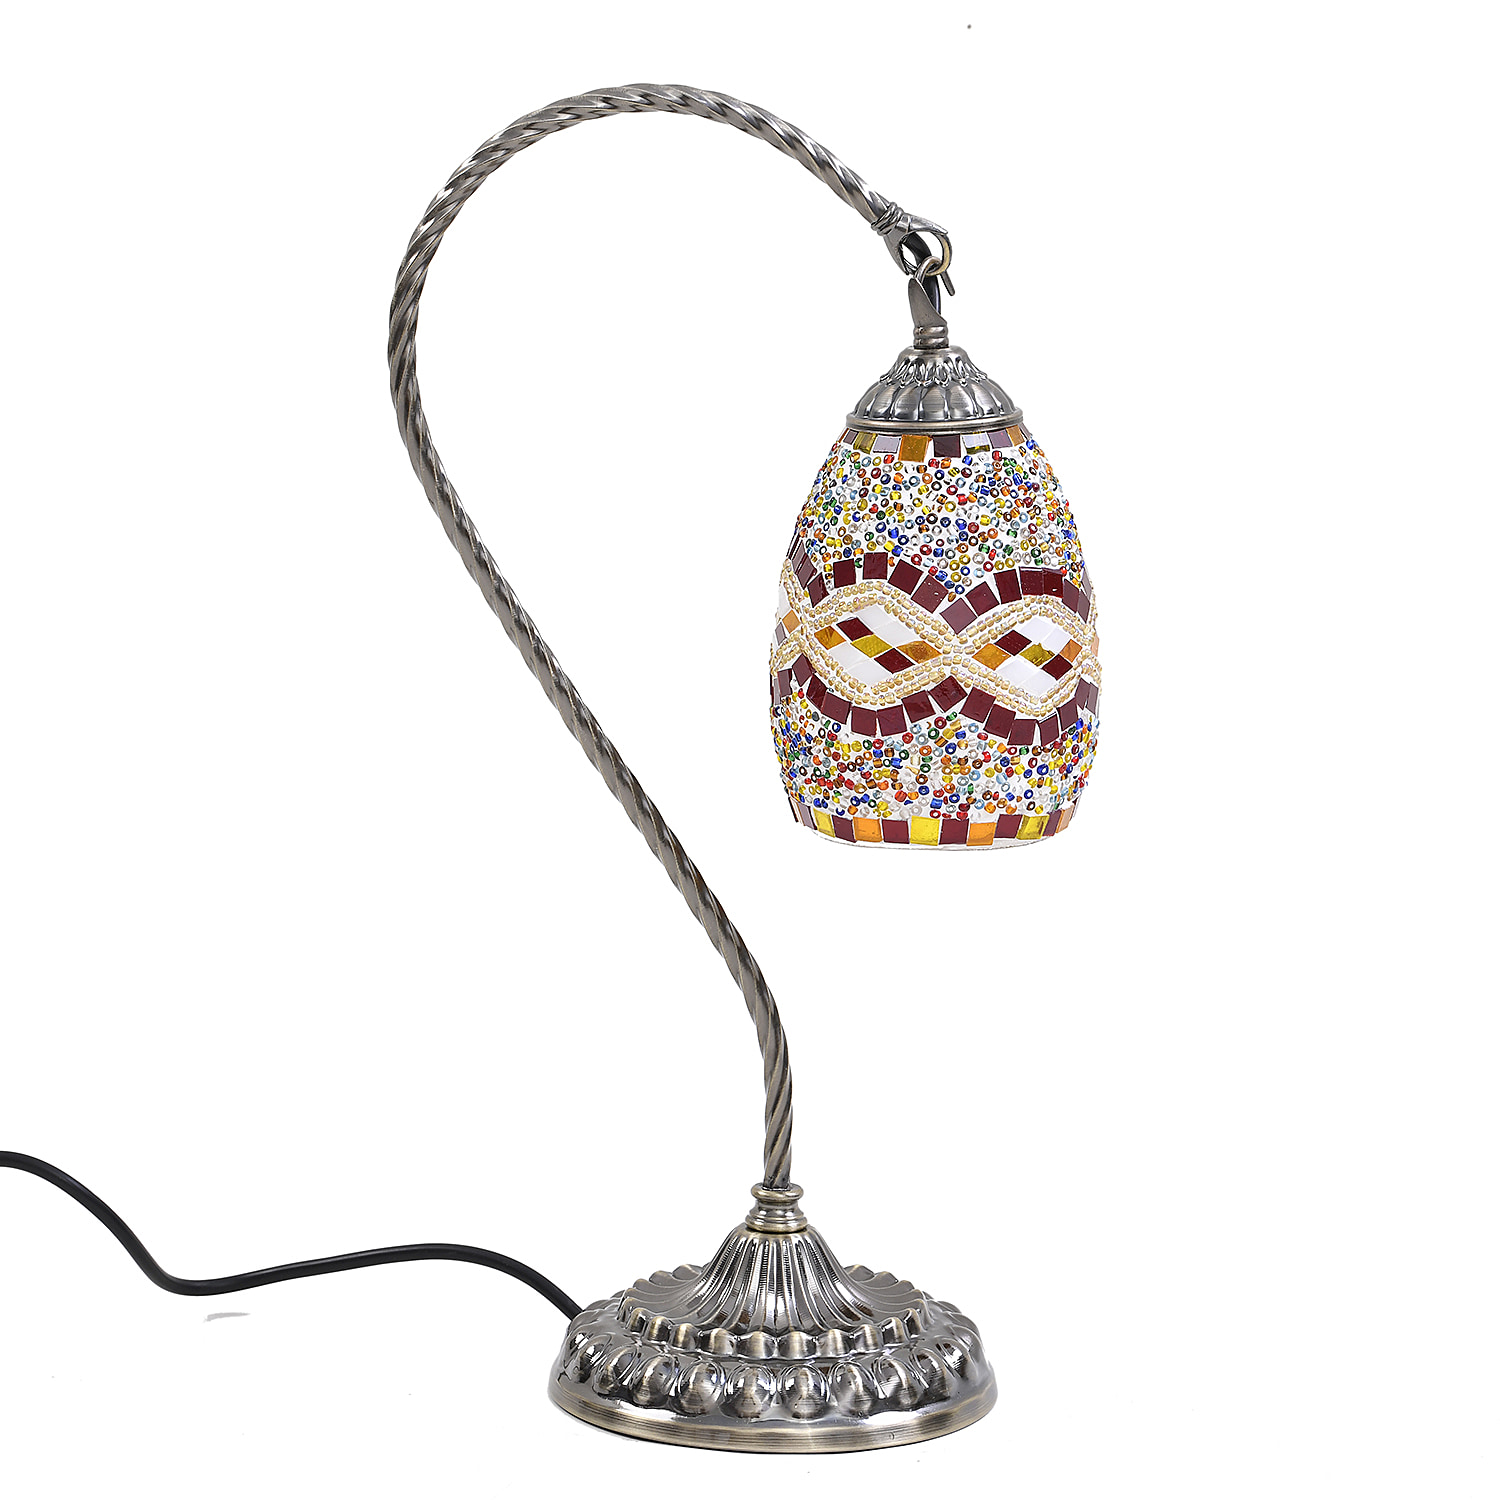 Handmade-Turkish-Mosaic-lampshade-Shape-Table-Lamp-for-Home-Dcor,-Offi